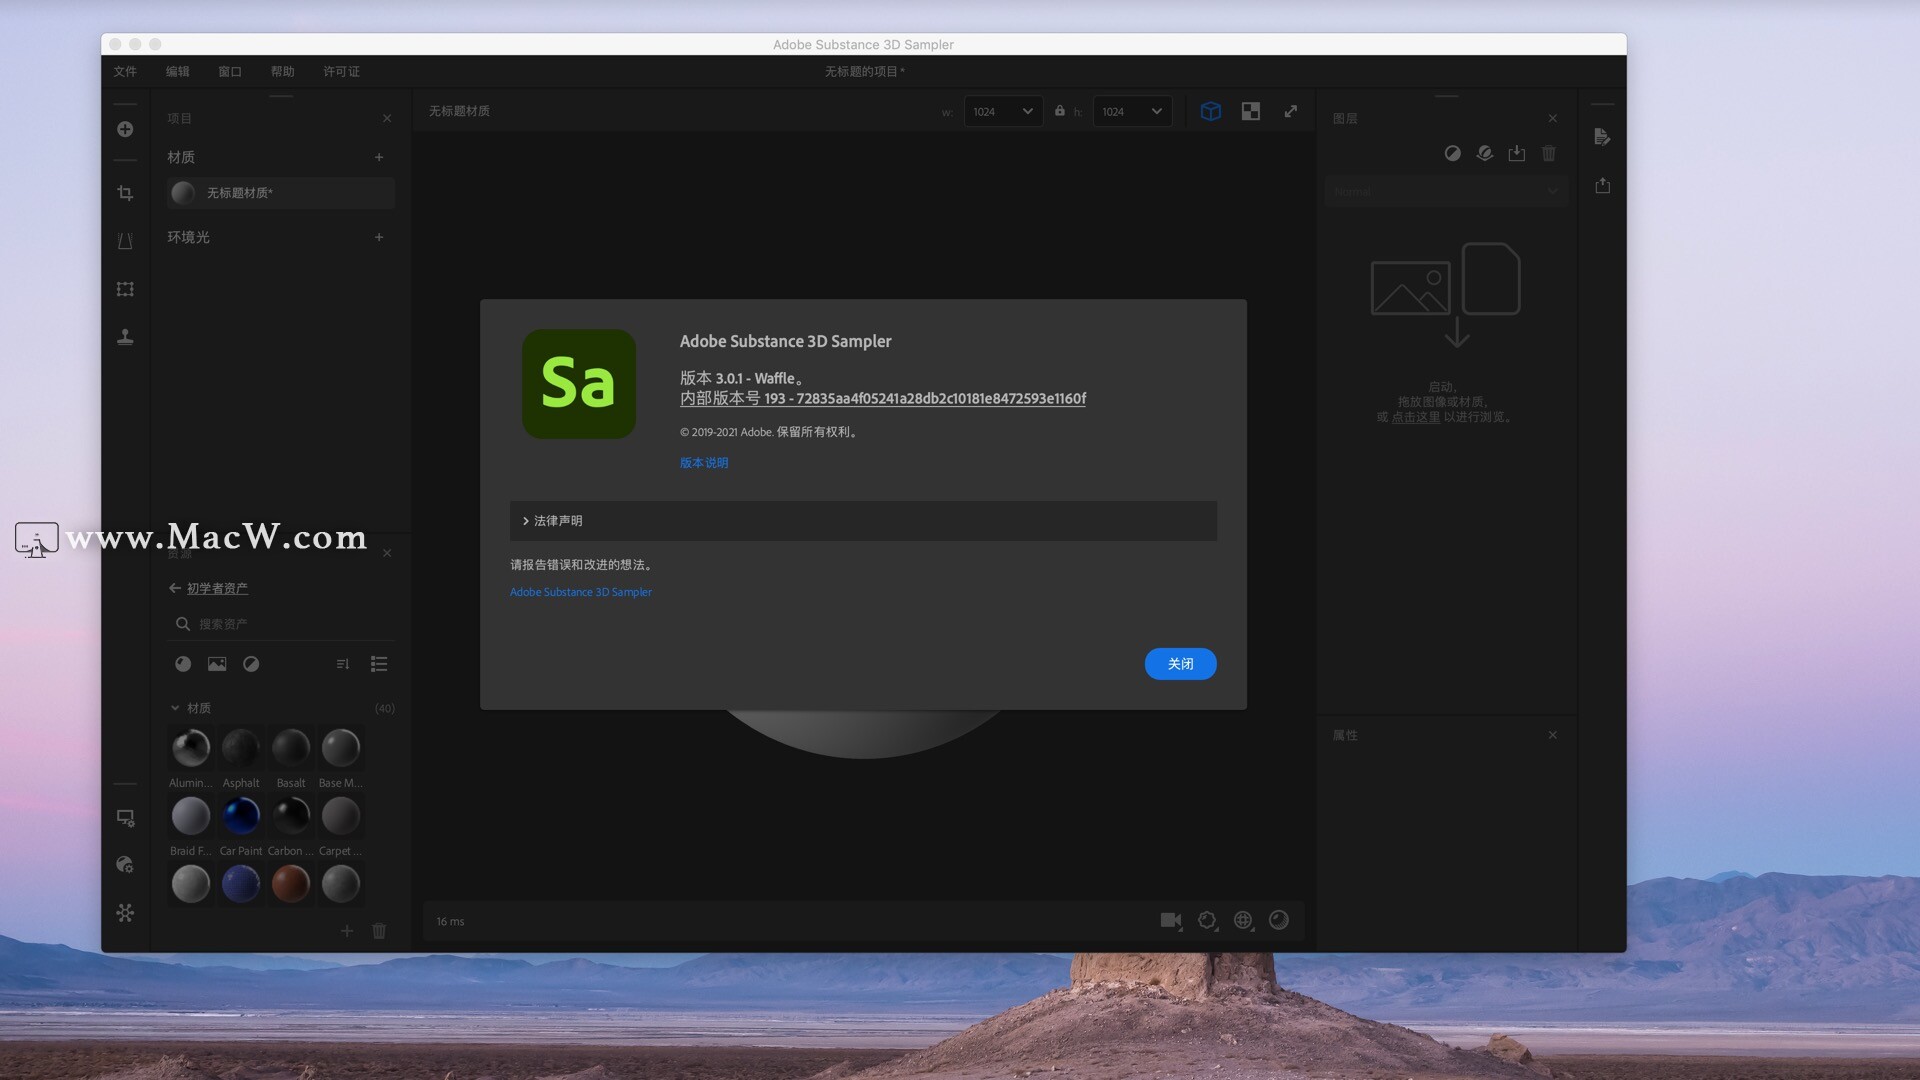 Adobe Substance 3D Sampler 4.2.2.3719 instal the new version for ios